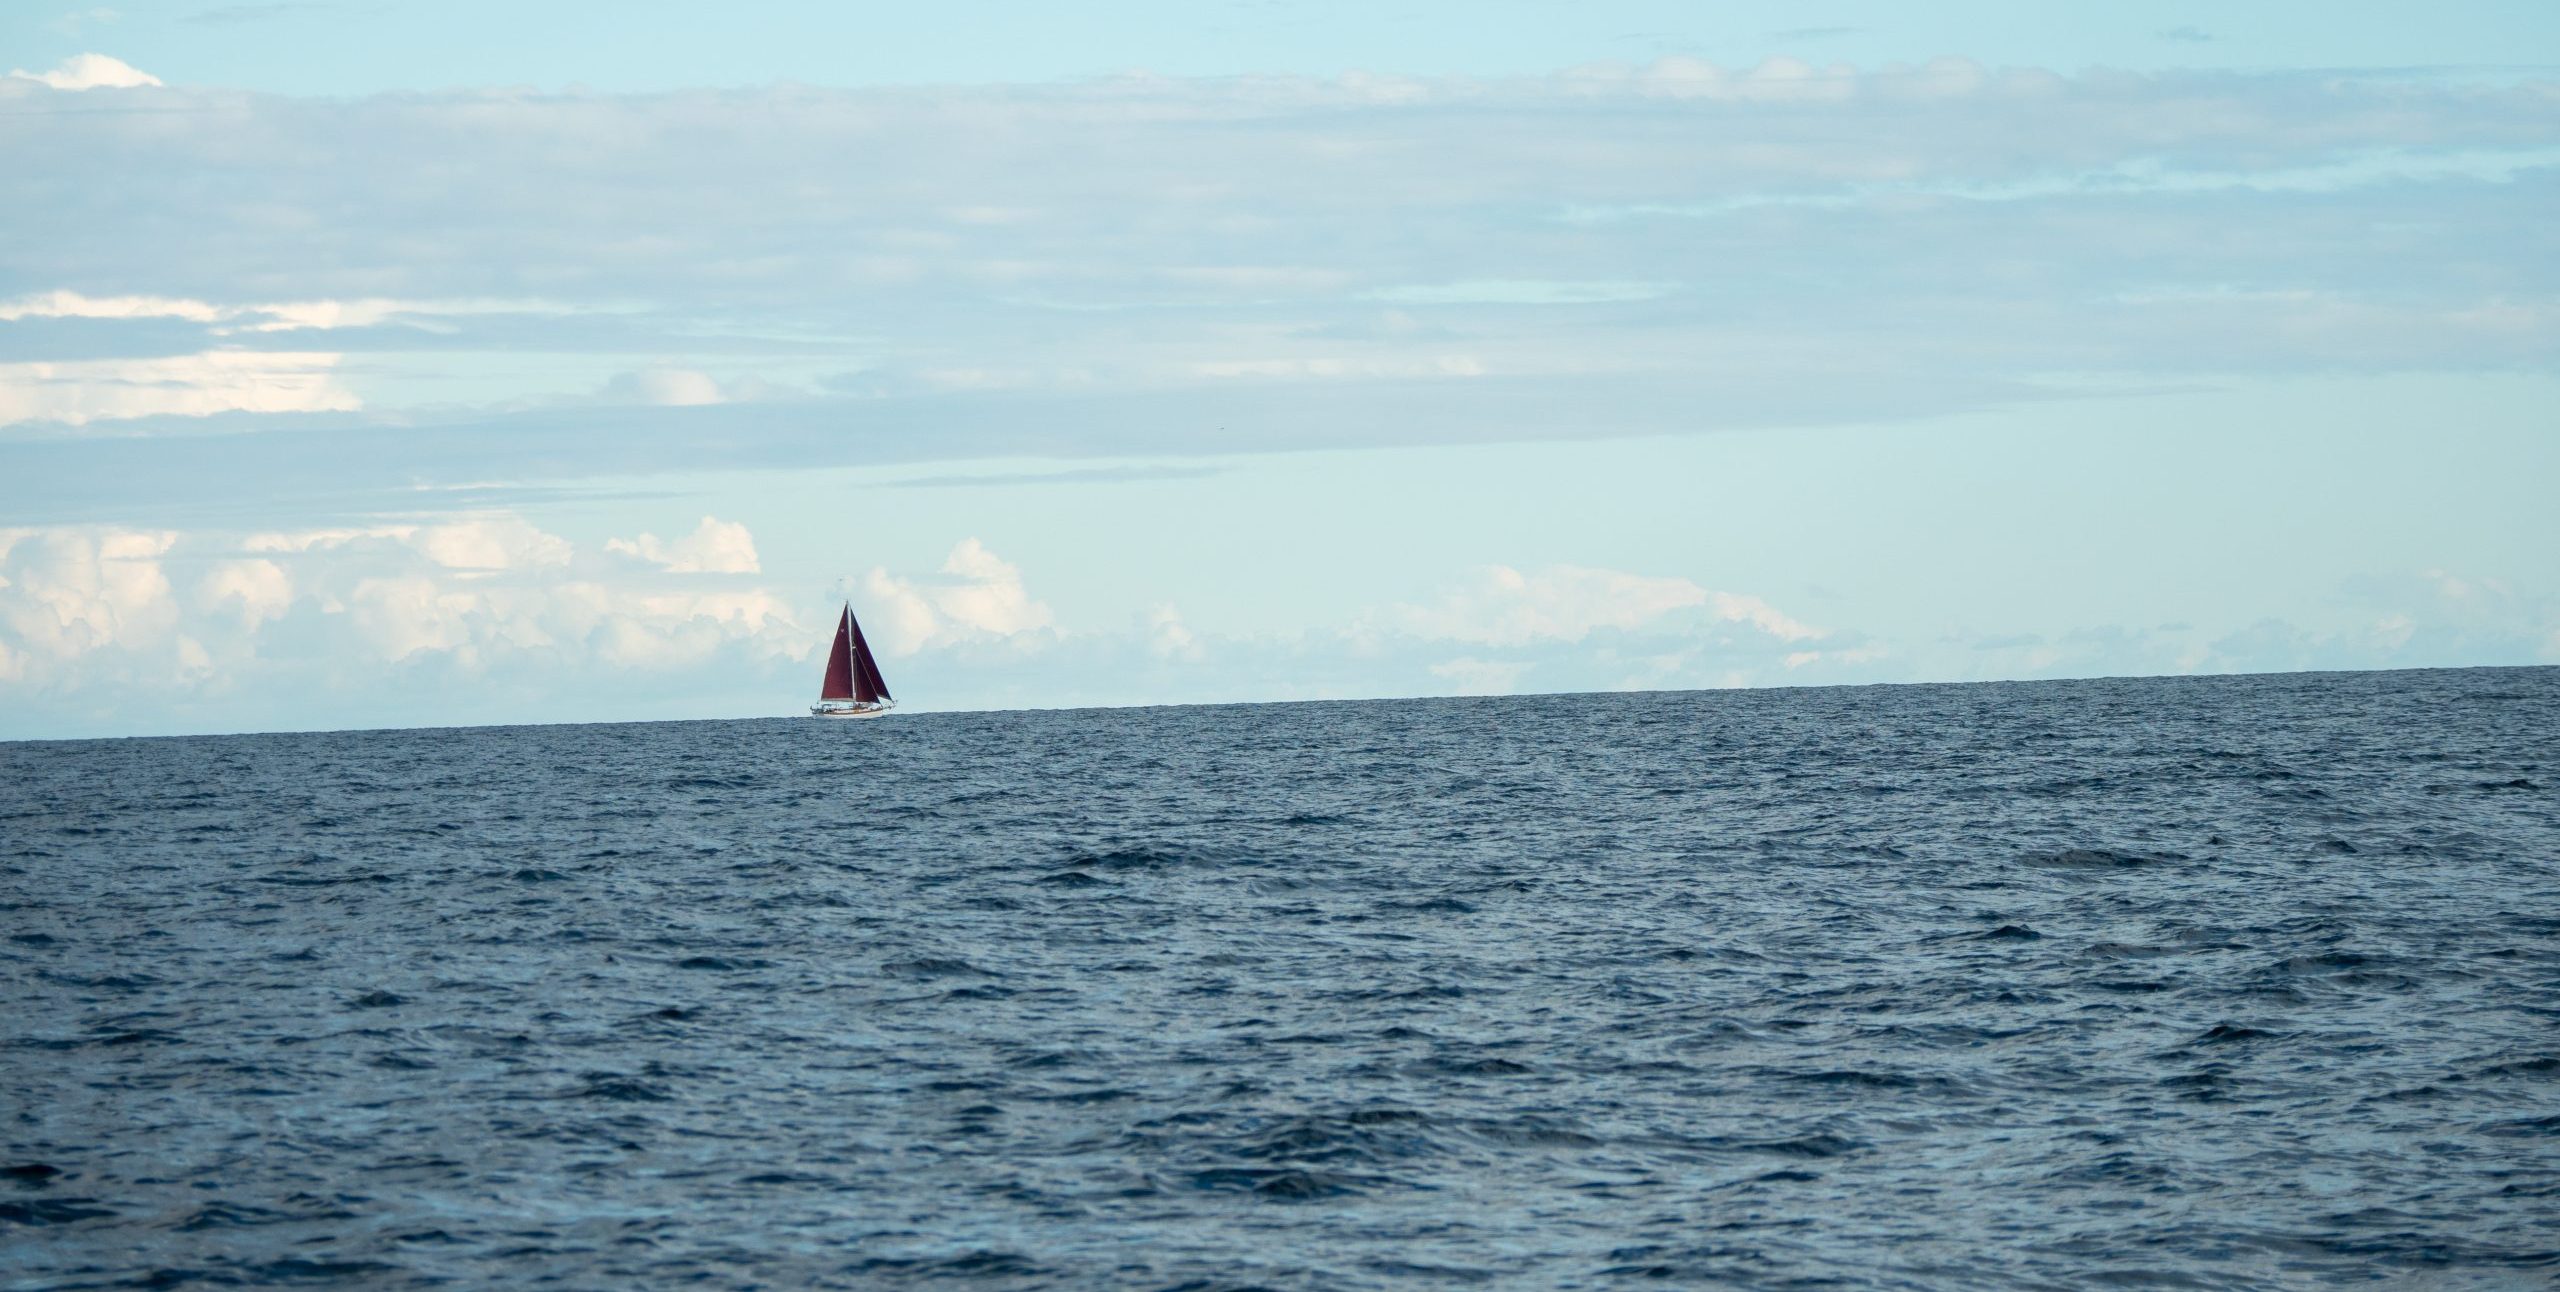 Kessel sailing along the horizon